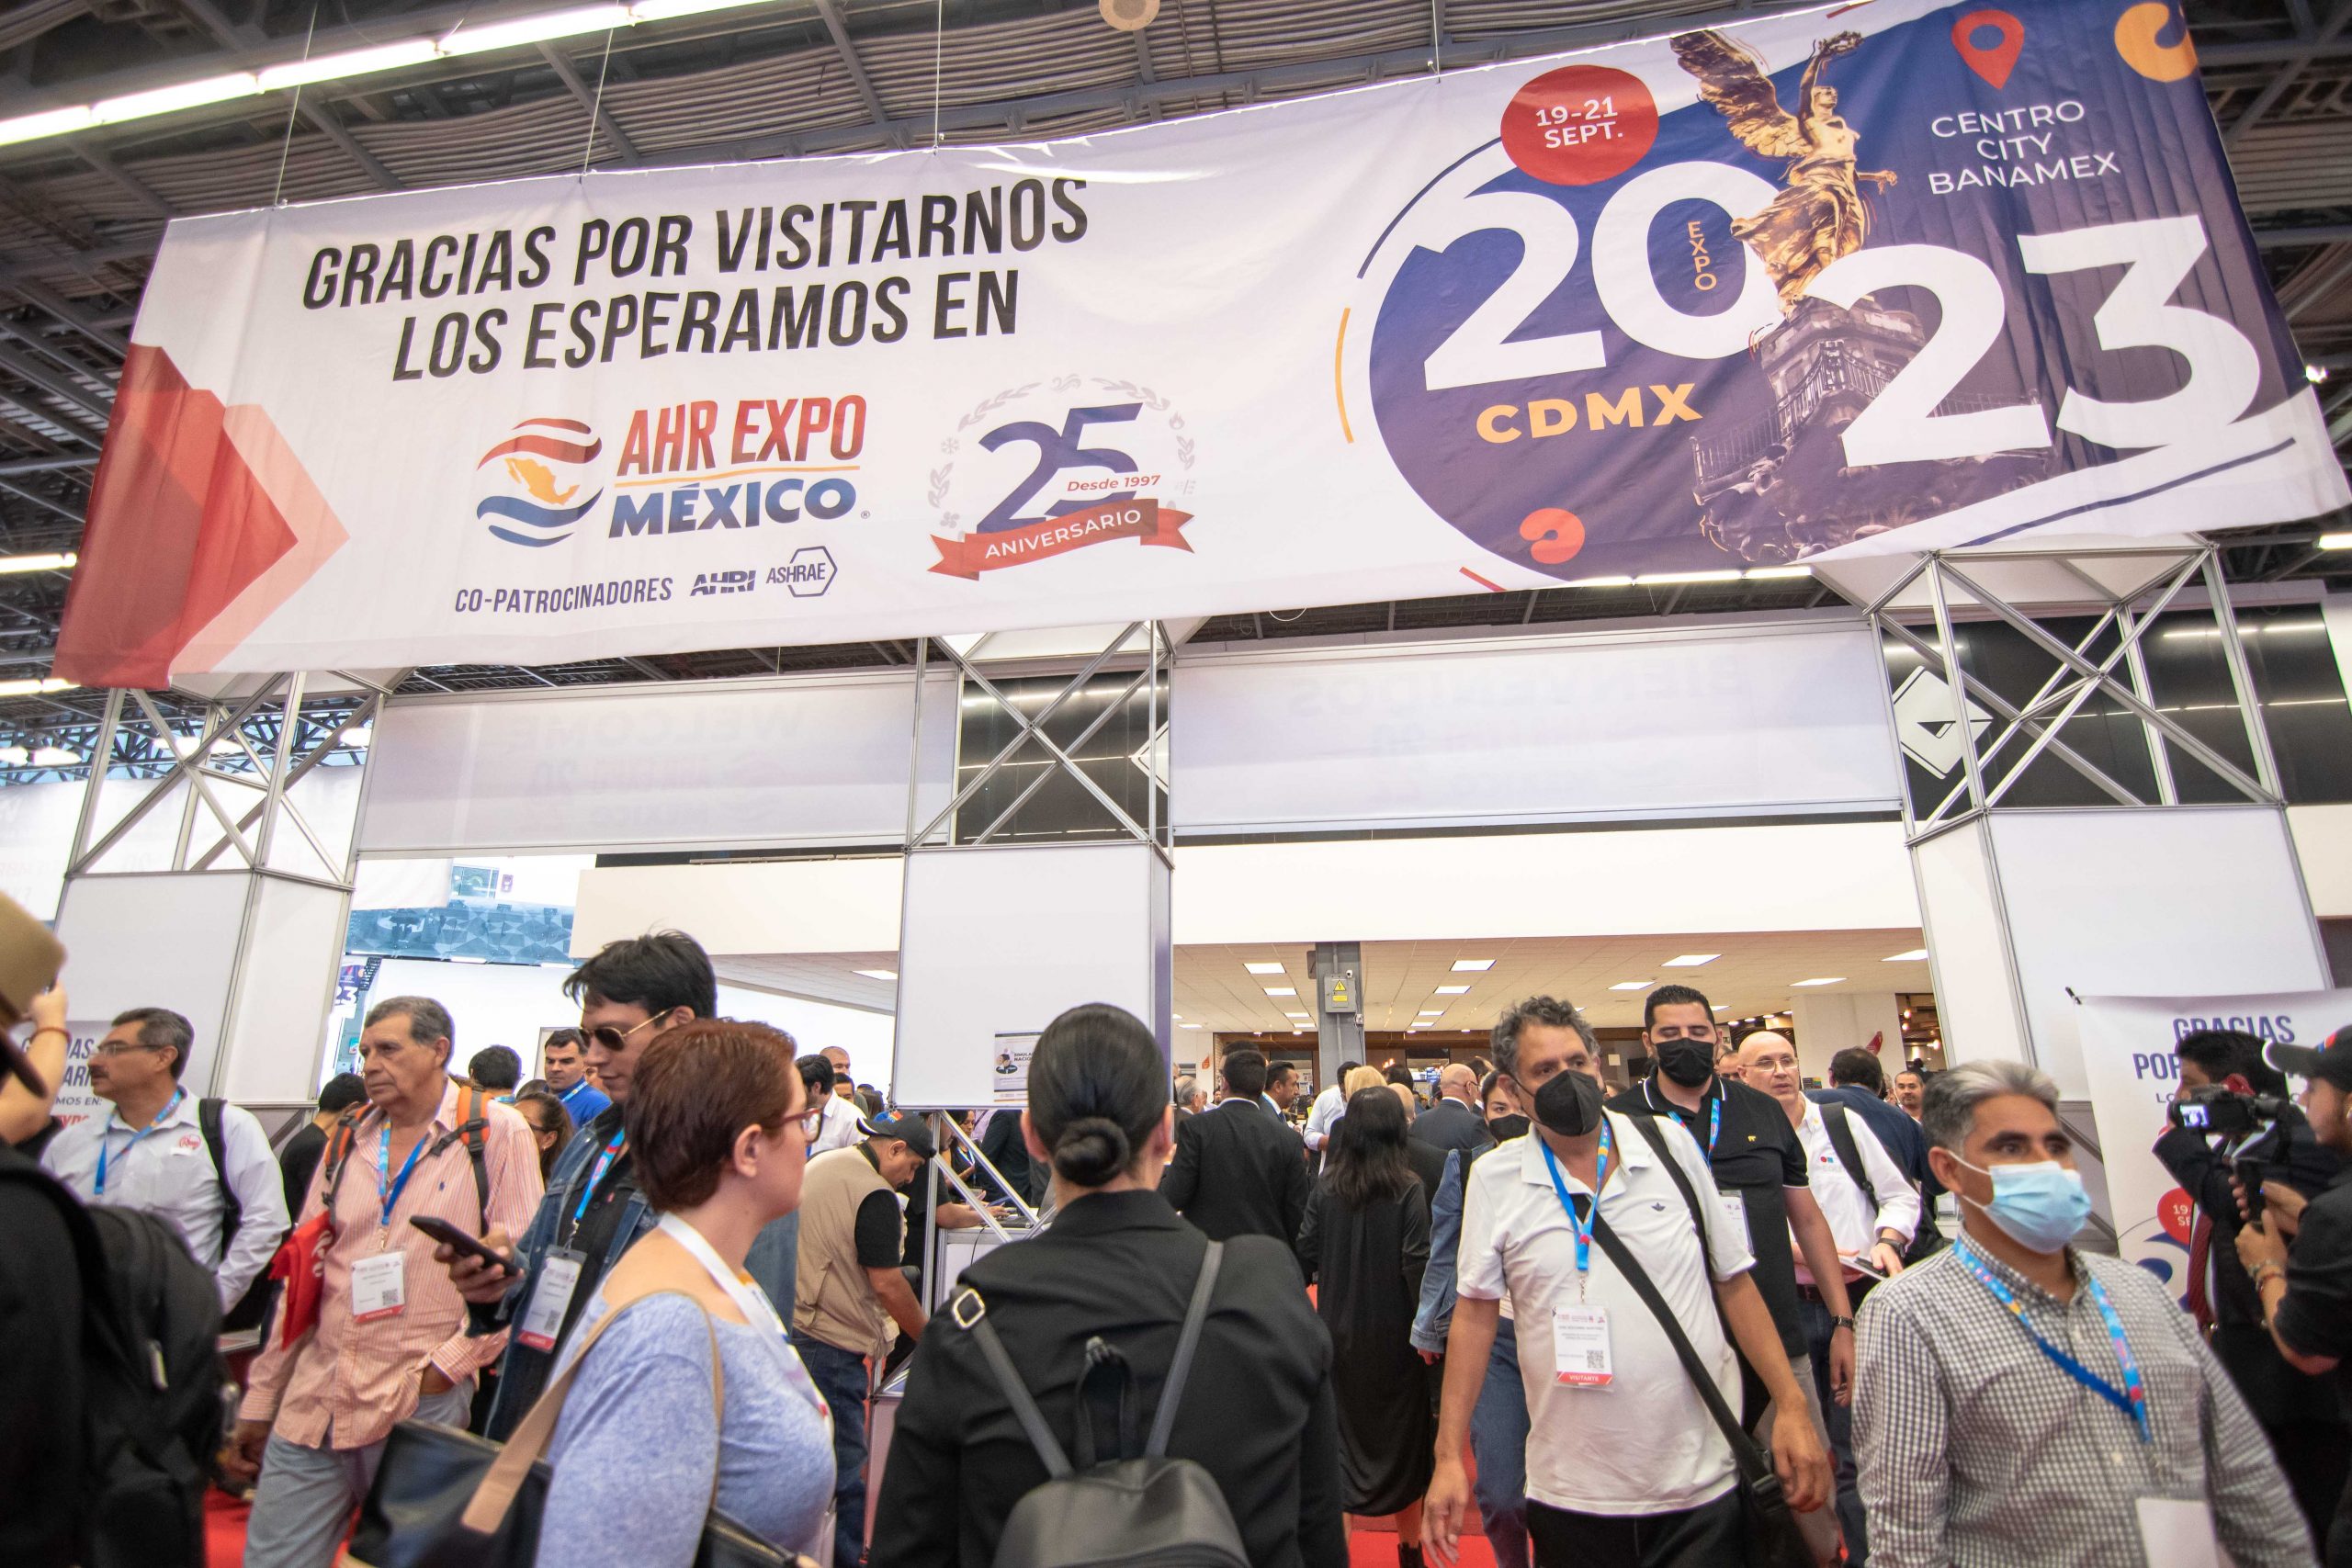 AHR EXPO MÉXICO 2022 | GUADALAJARA